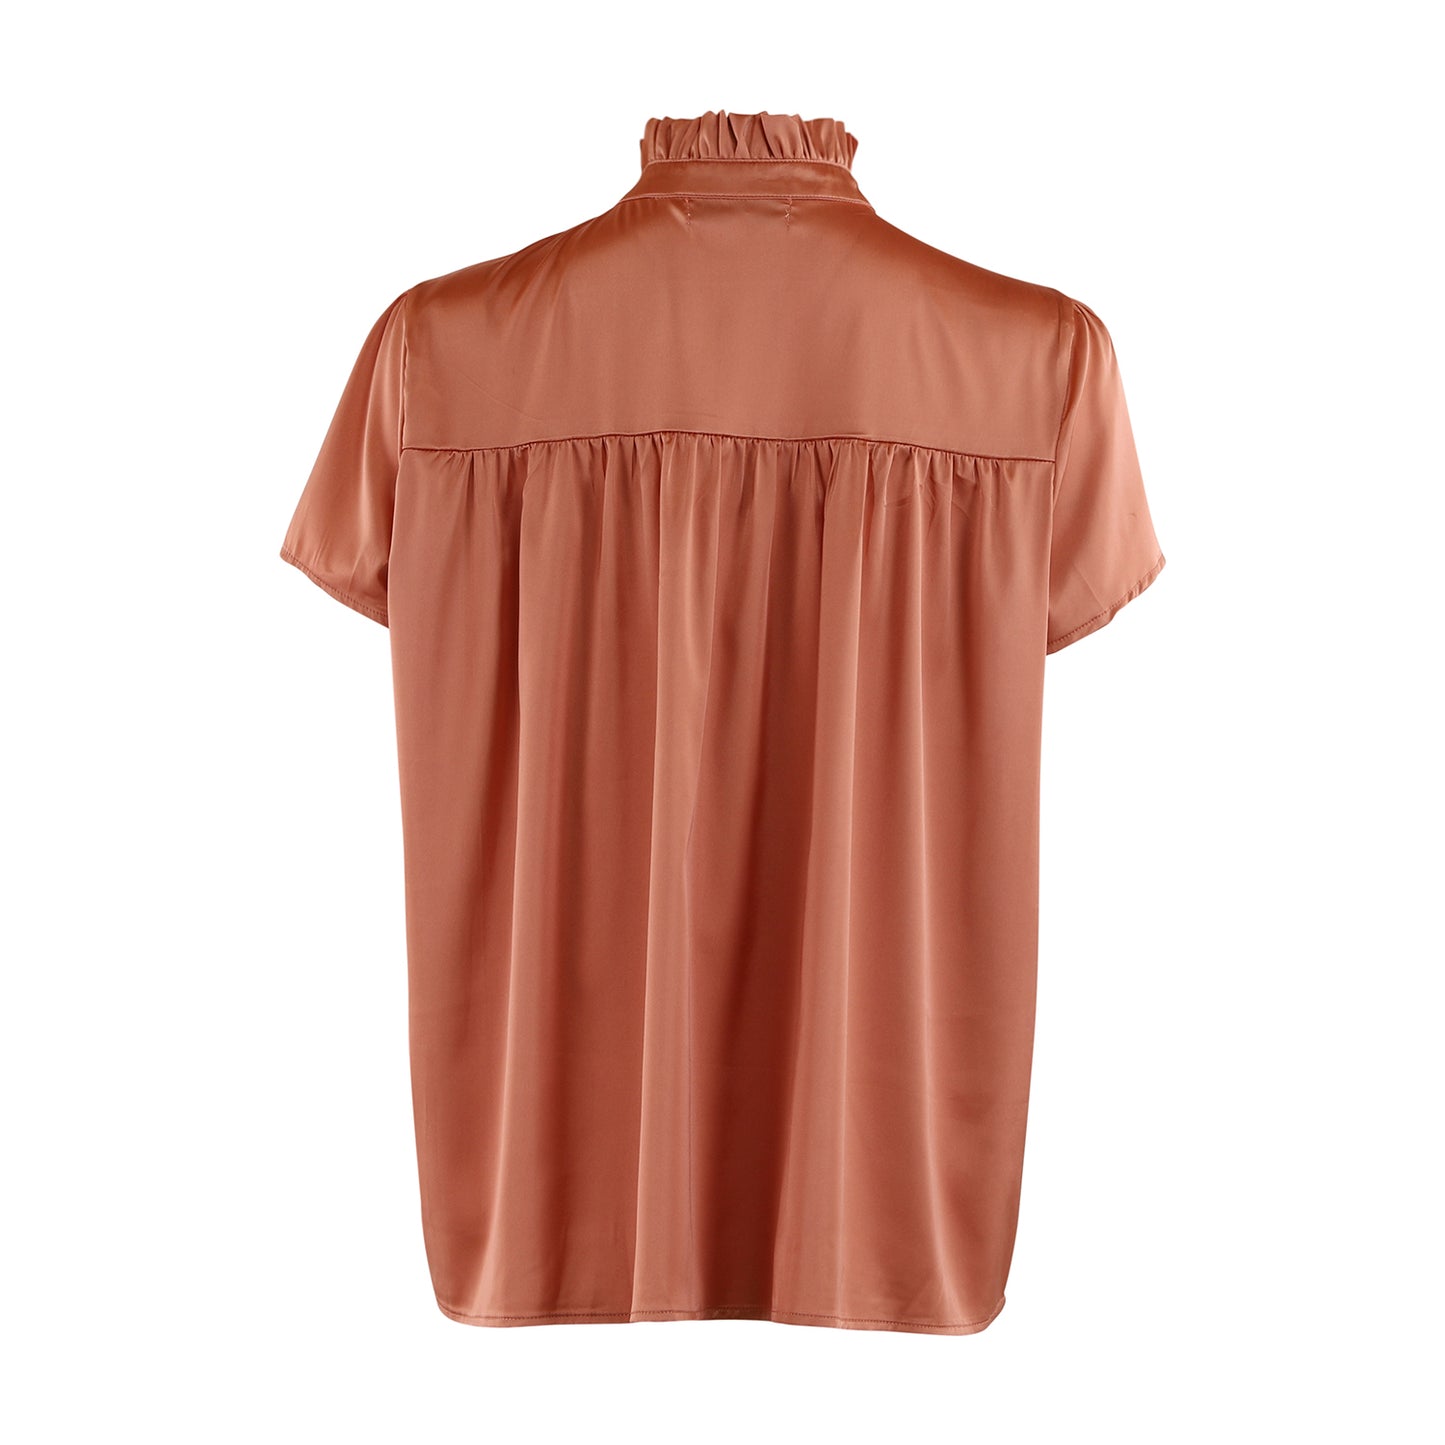 CONTINUE - Malika shirt - Orange